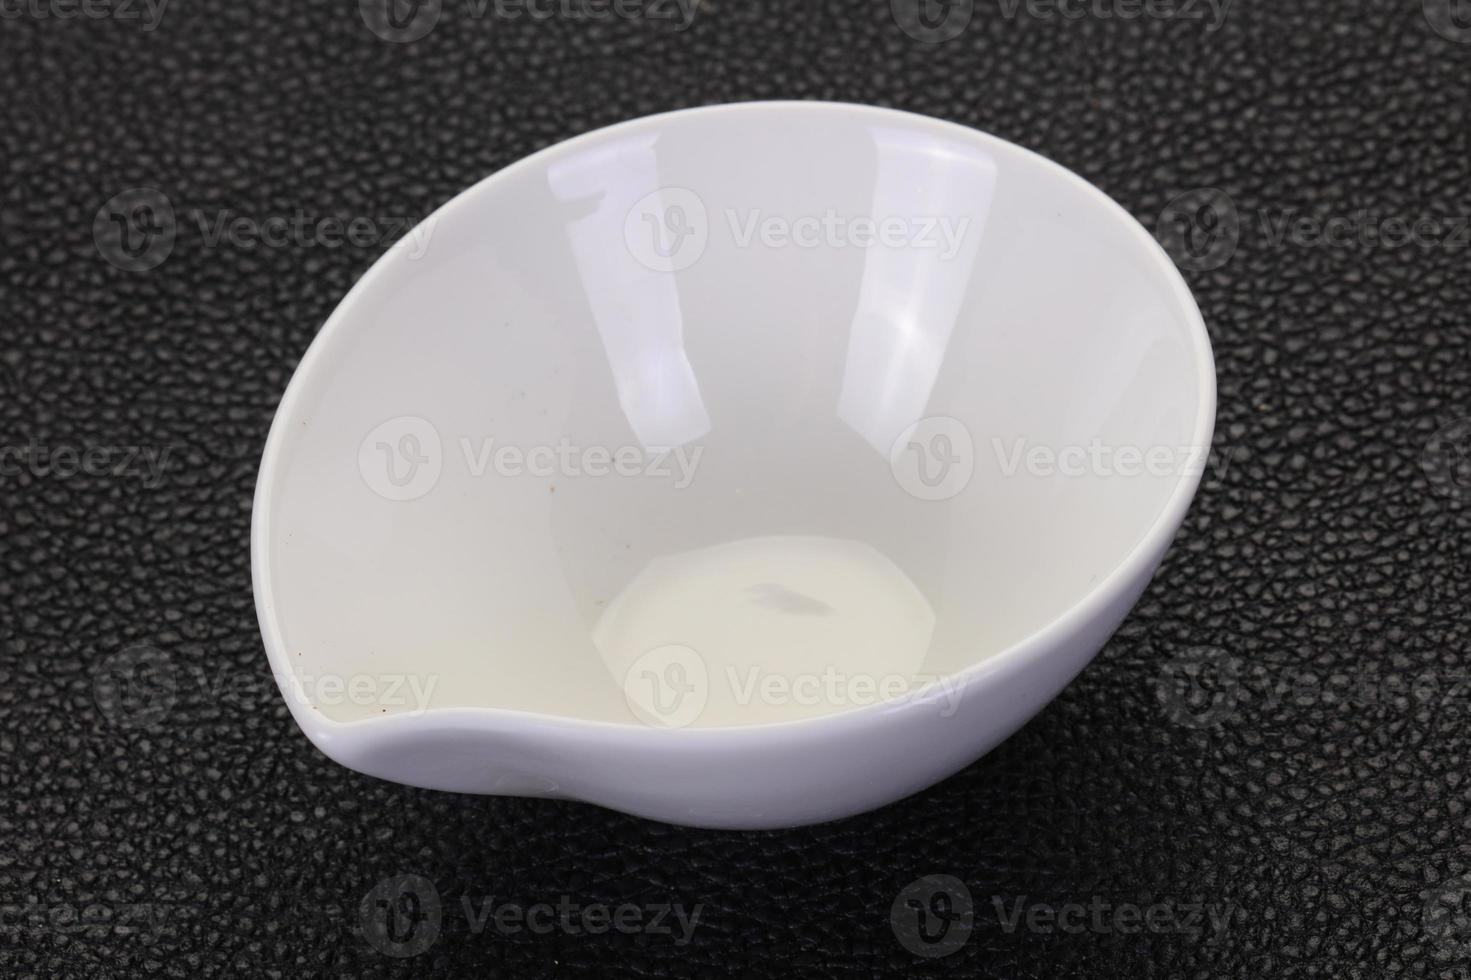 White porcelain bowl photo